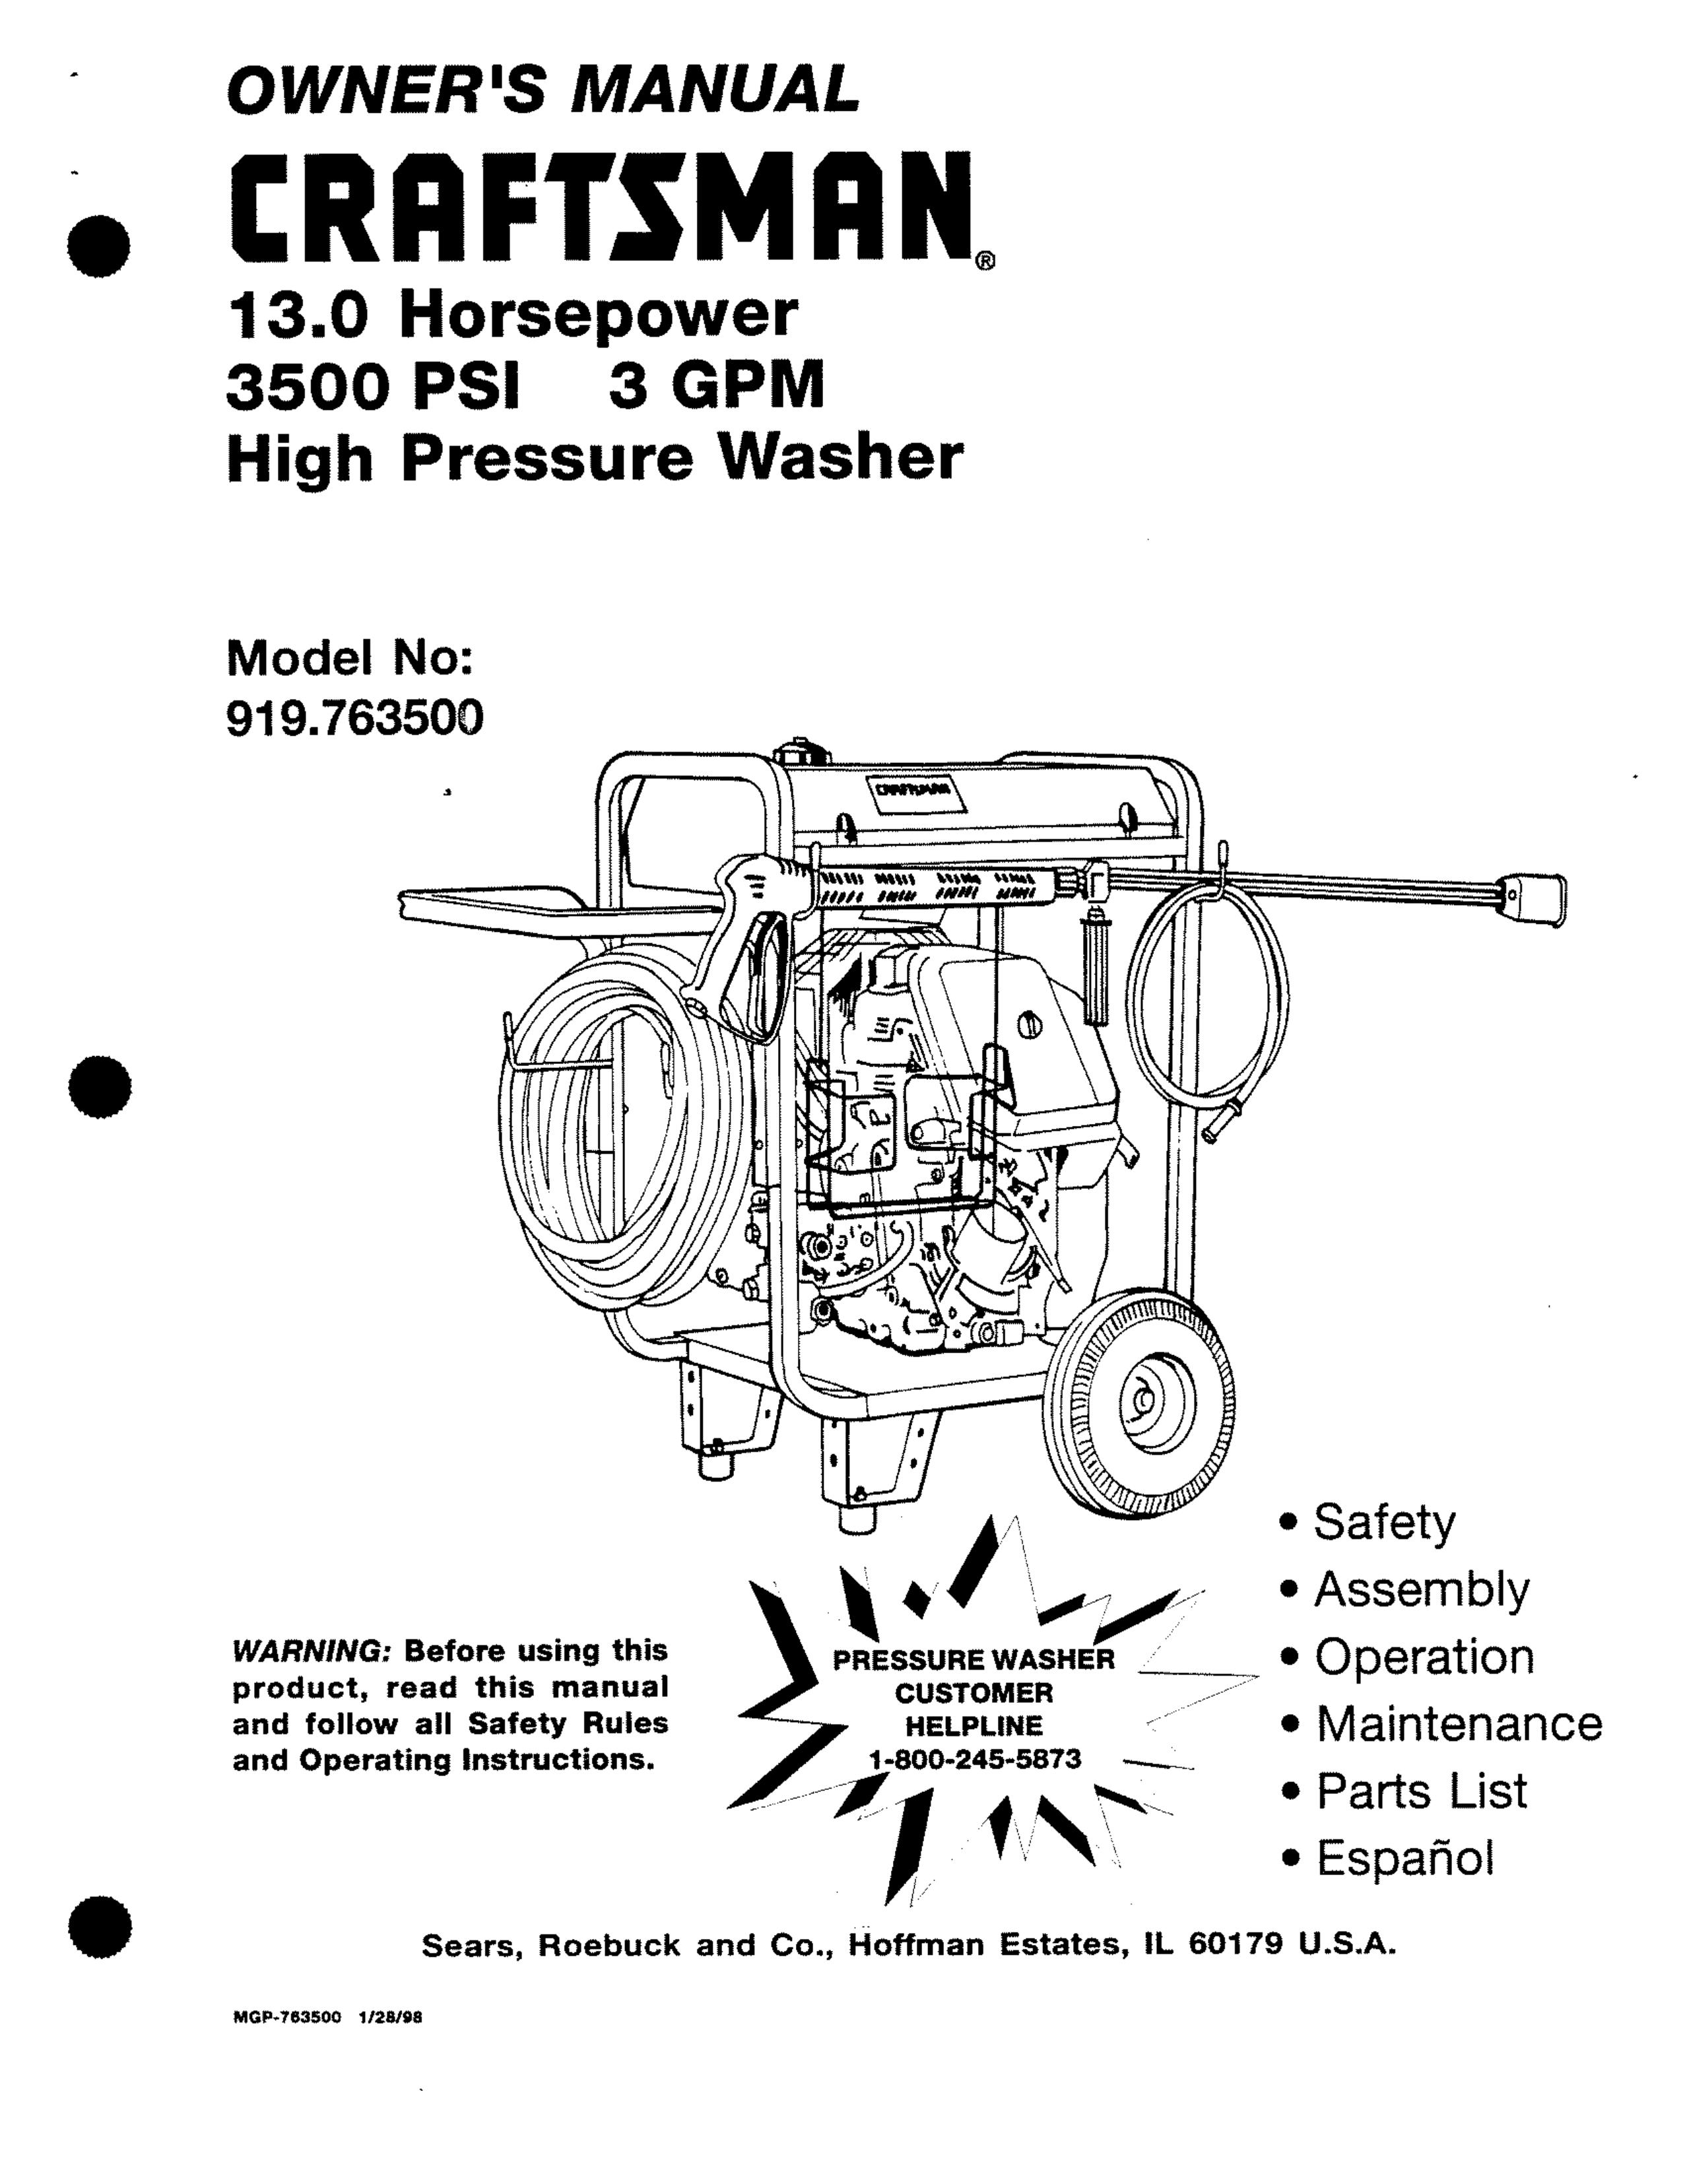 Craftsman 919.763500 Pressure Washer User Manual